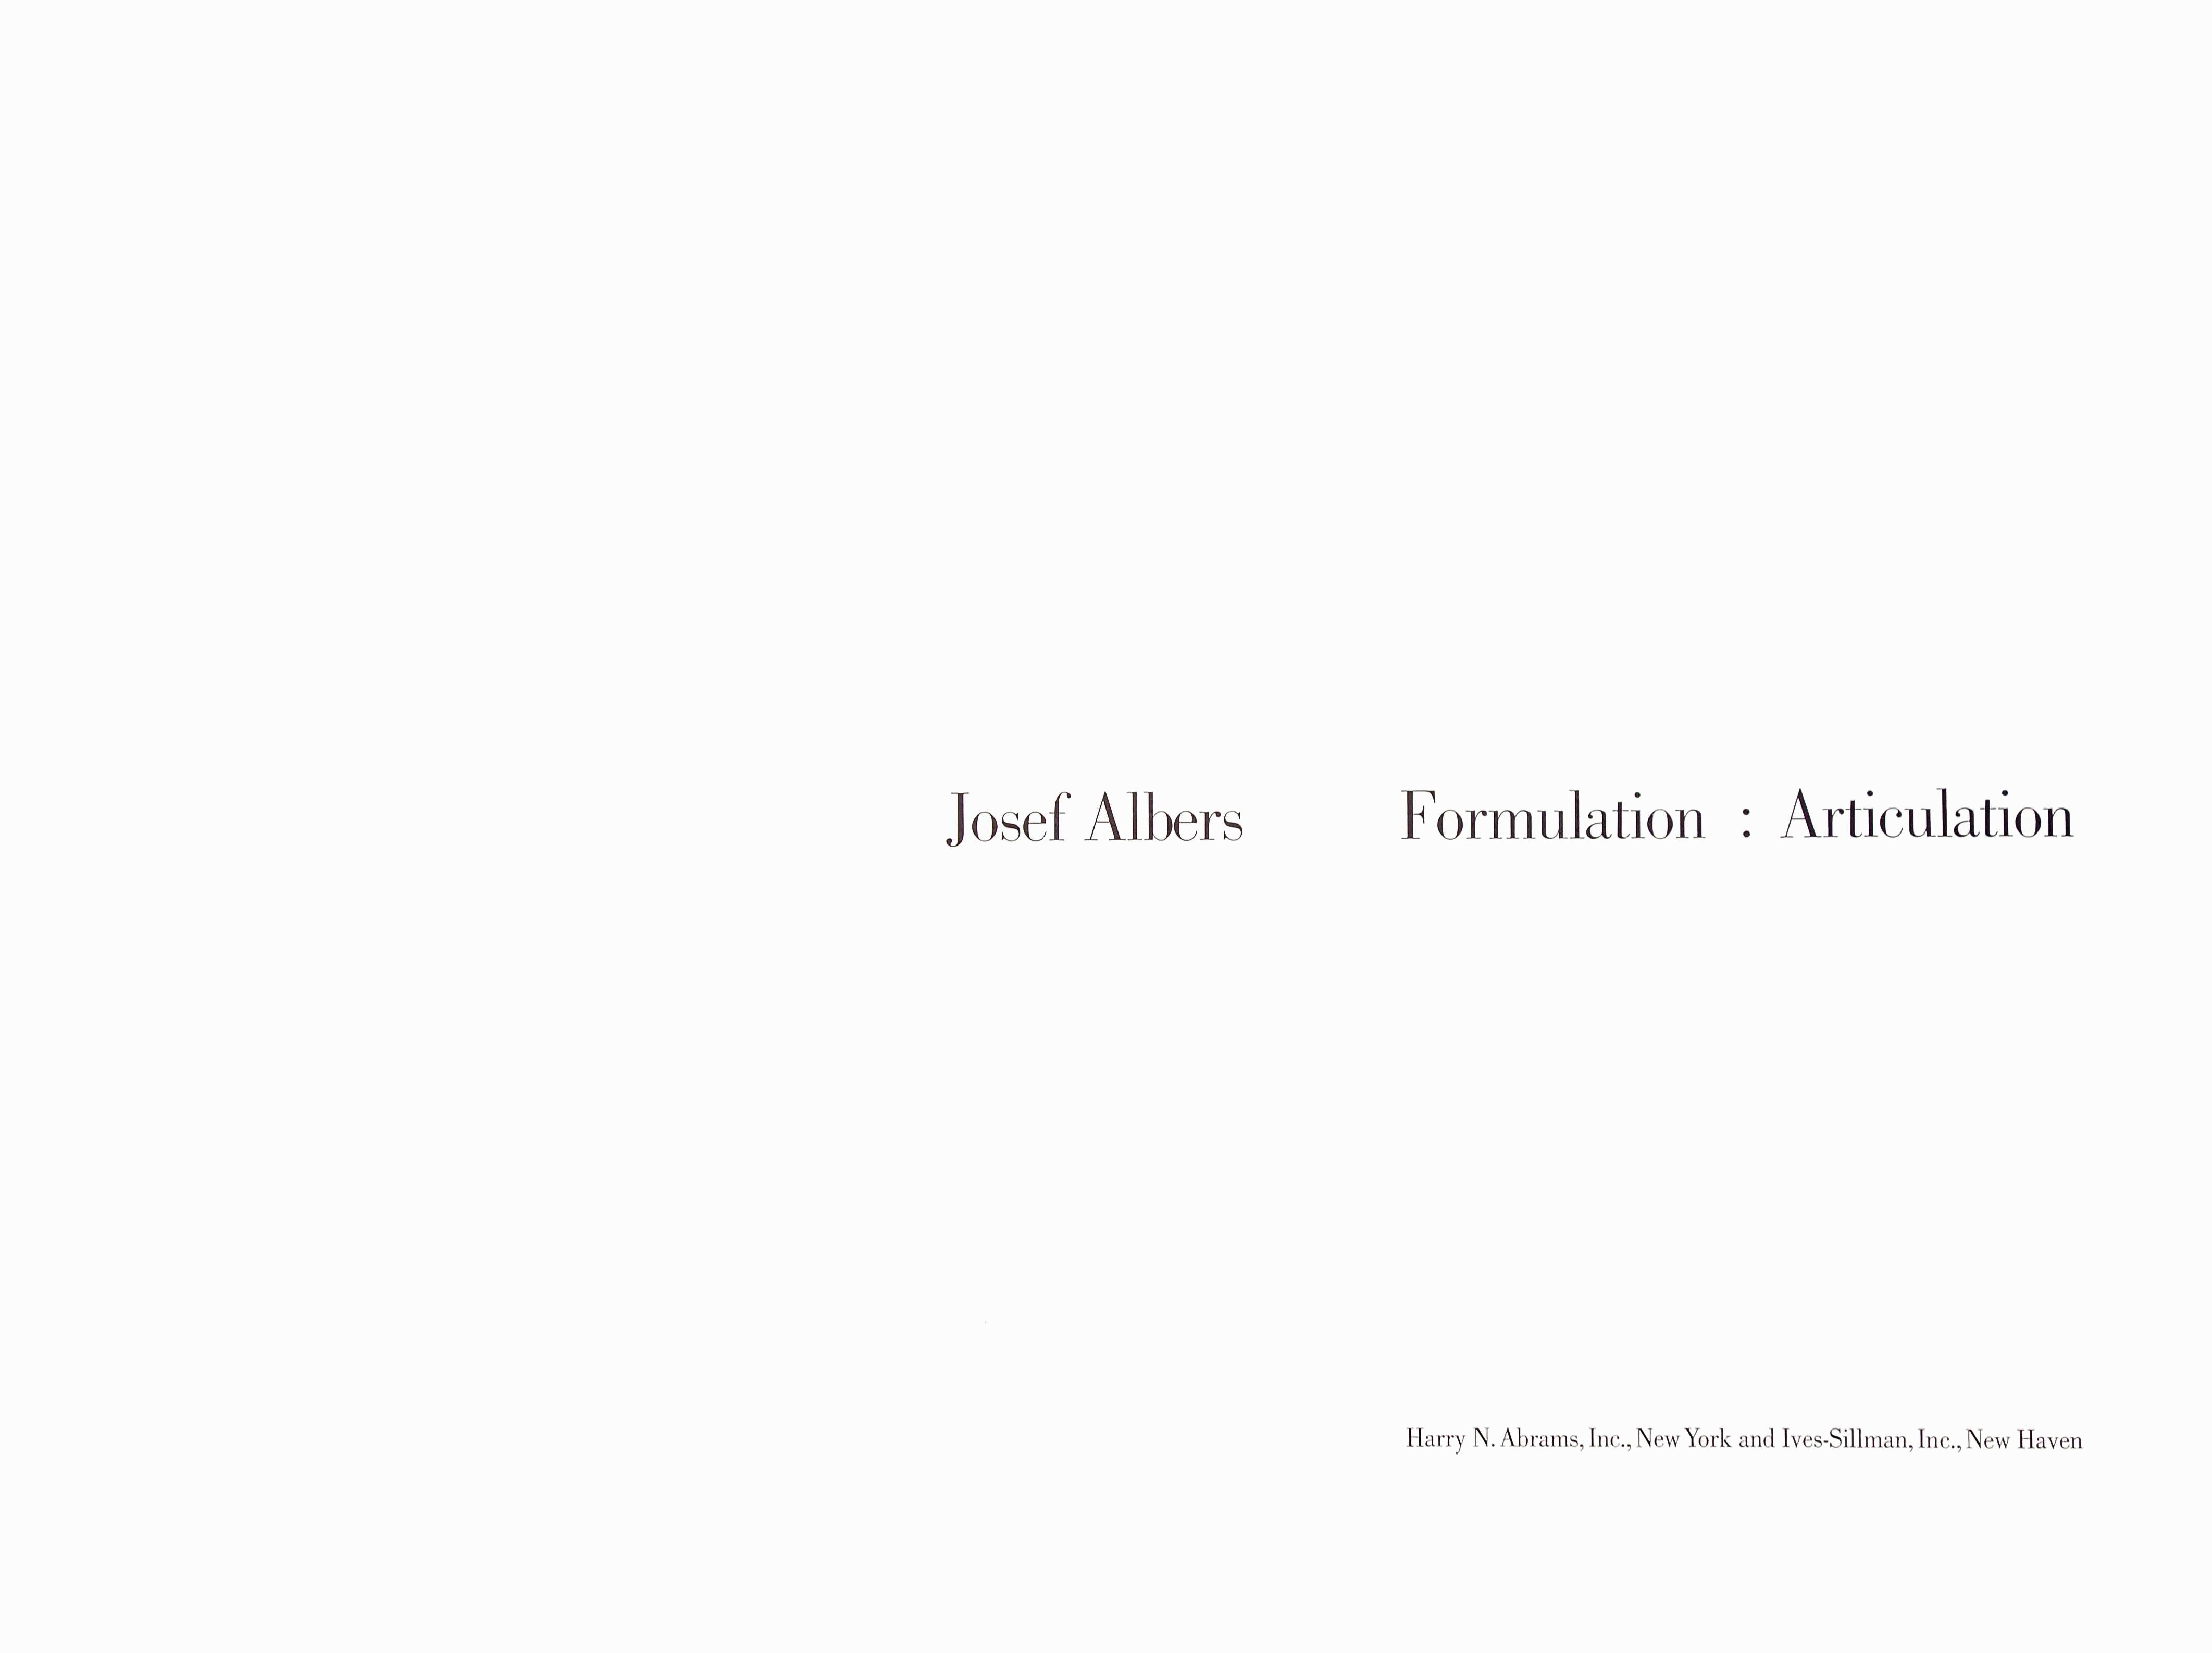 Formulation : Articulation, Portfolio I, Folder 23 (B) 